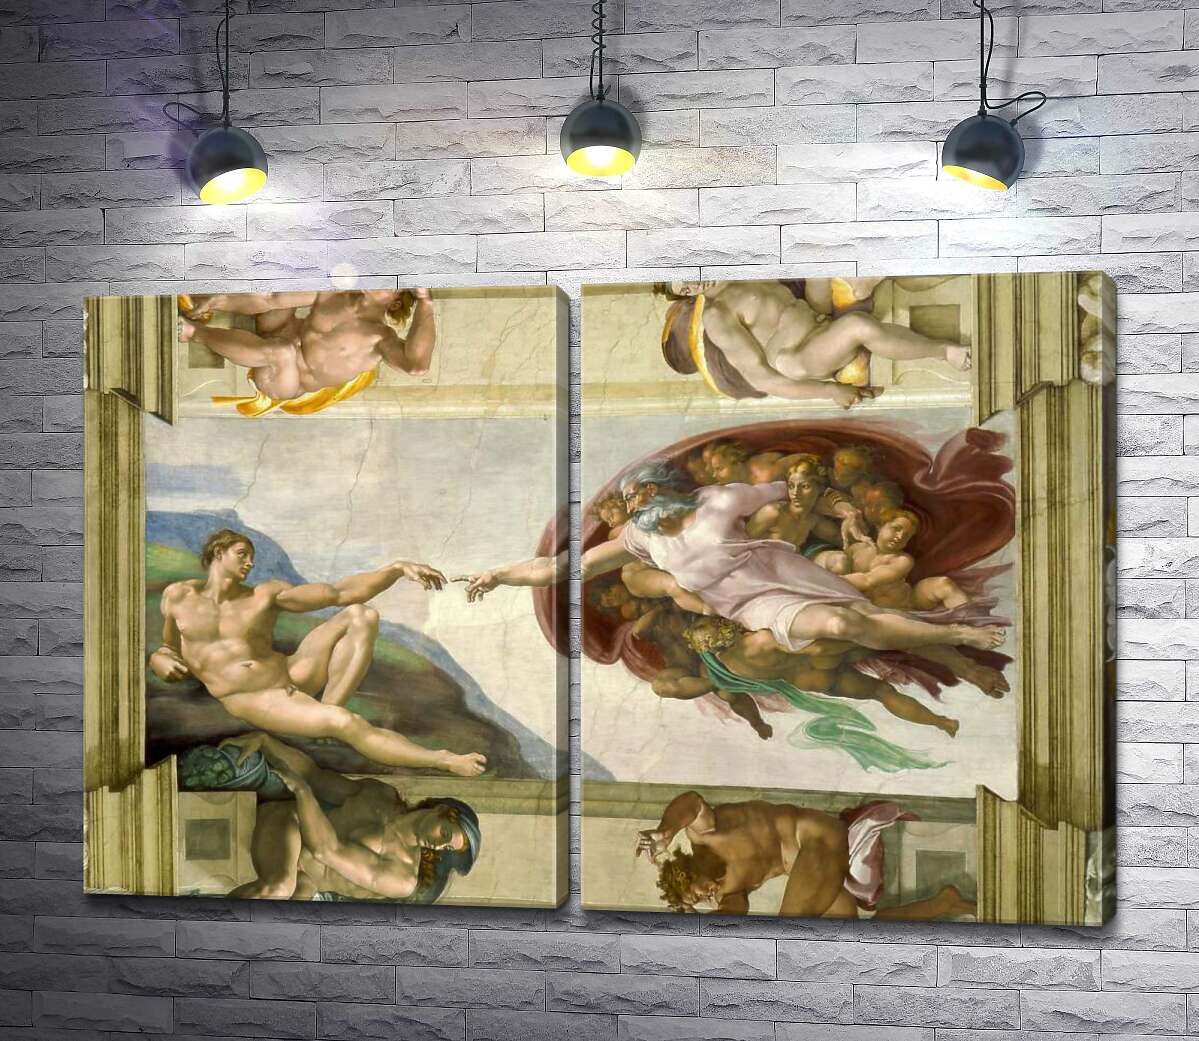 модульная картина Создание Адама (La creazione di Adamo) - Микеланджело Буонарроти (Michelangelo Buonarroti)